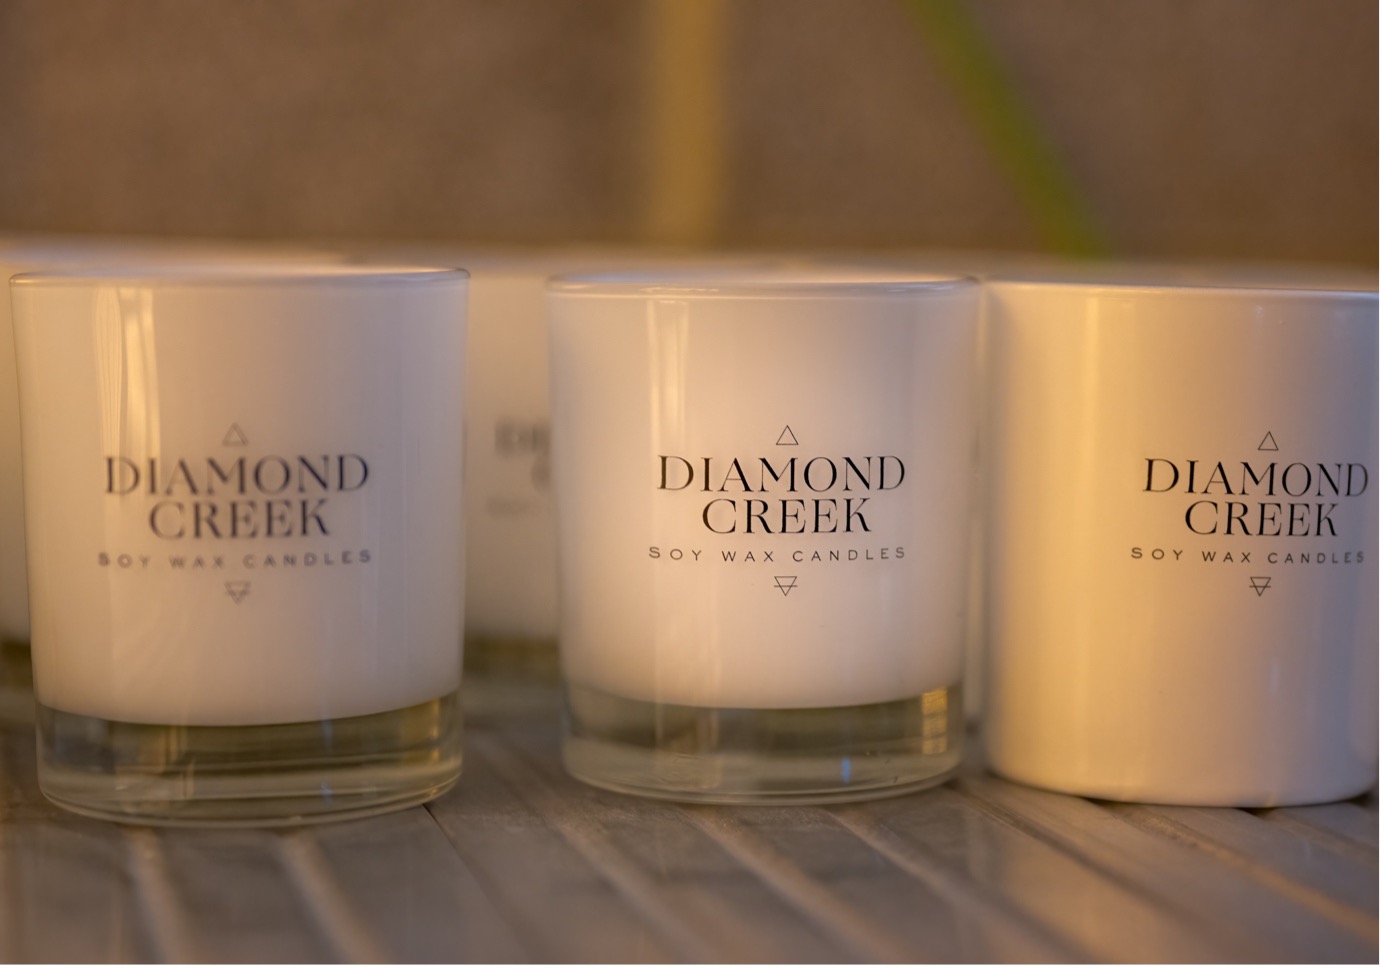 Customised jars for the Diamond Creek company.